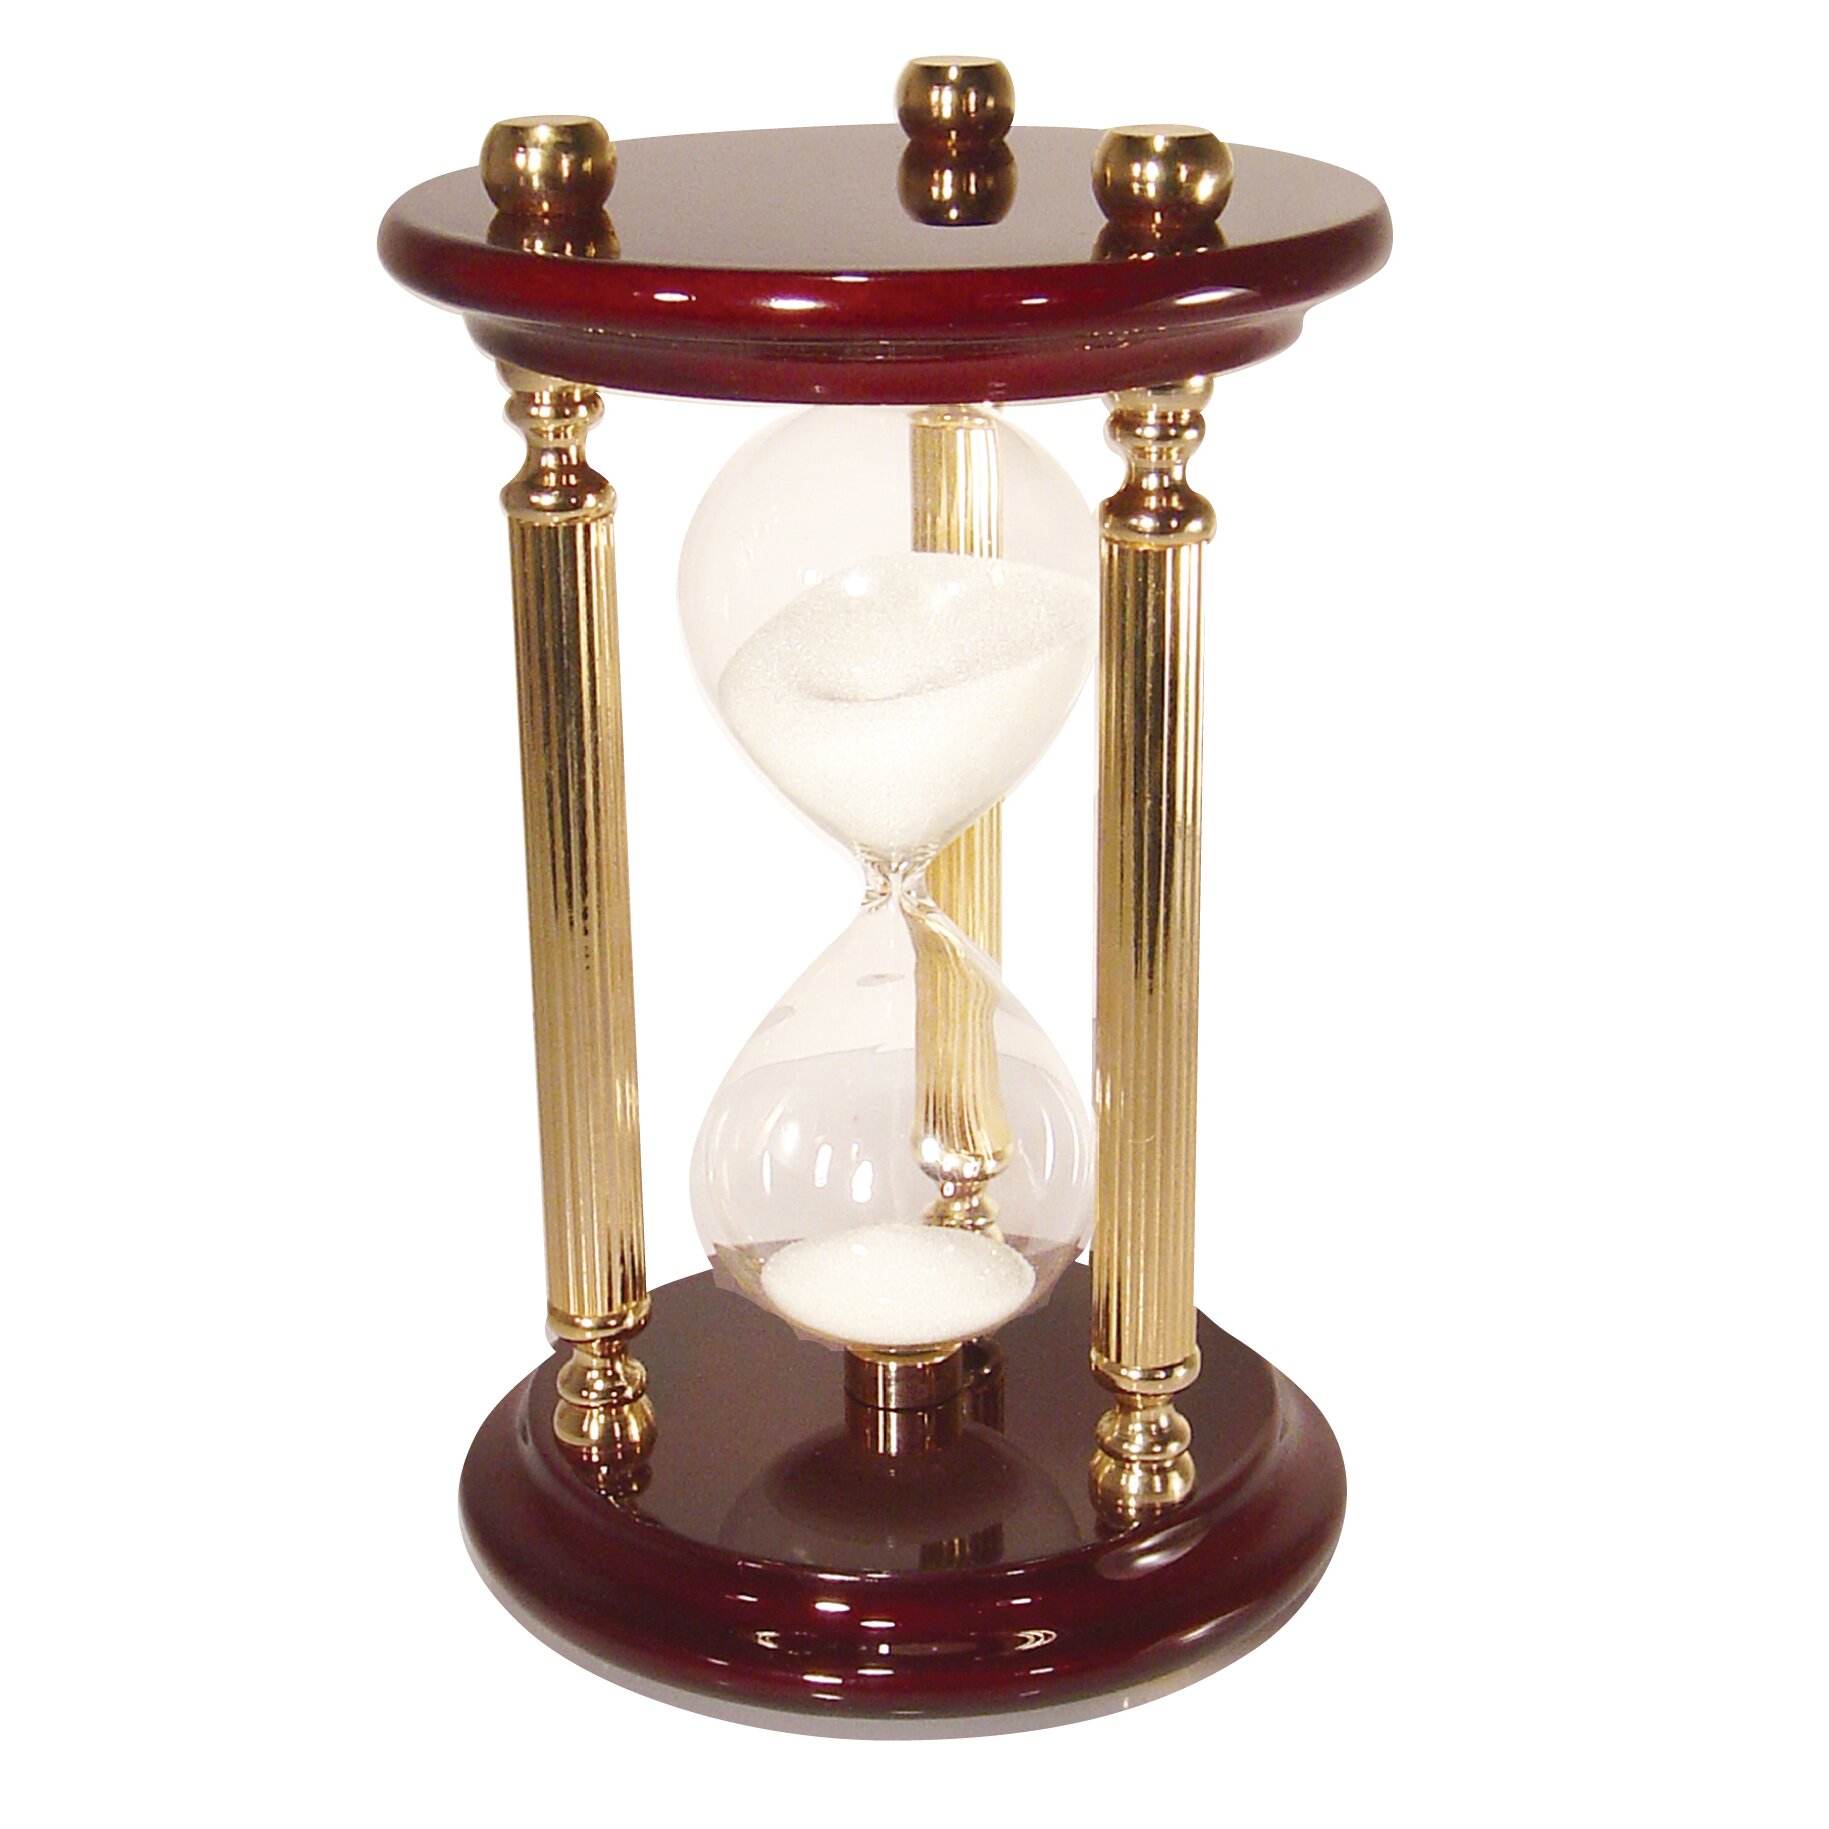 River City Clocks 15 Minute Sand Timer Hourglass & Reviews | Wayfair1829 x 1829